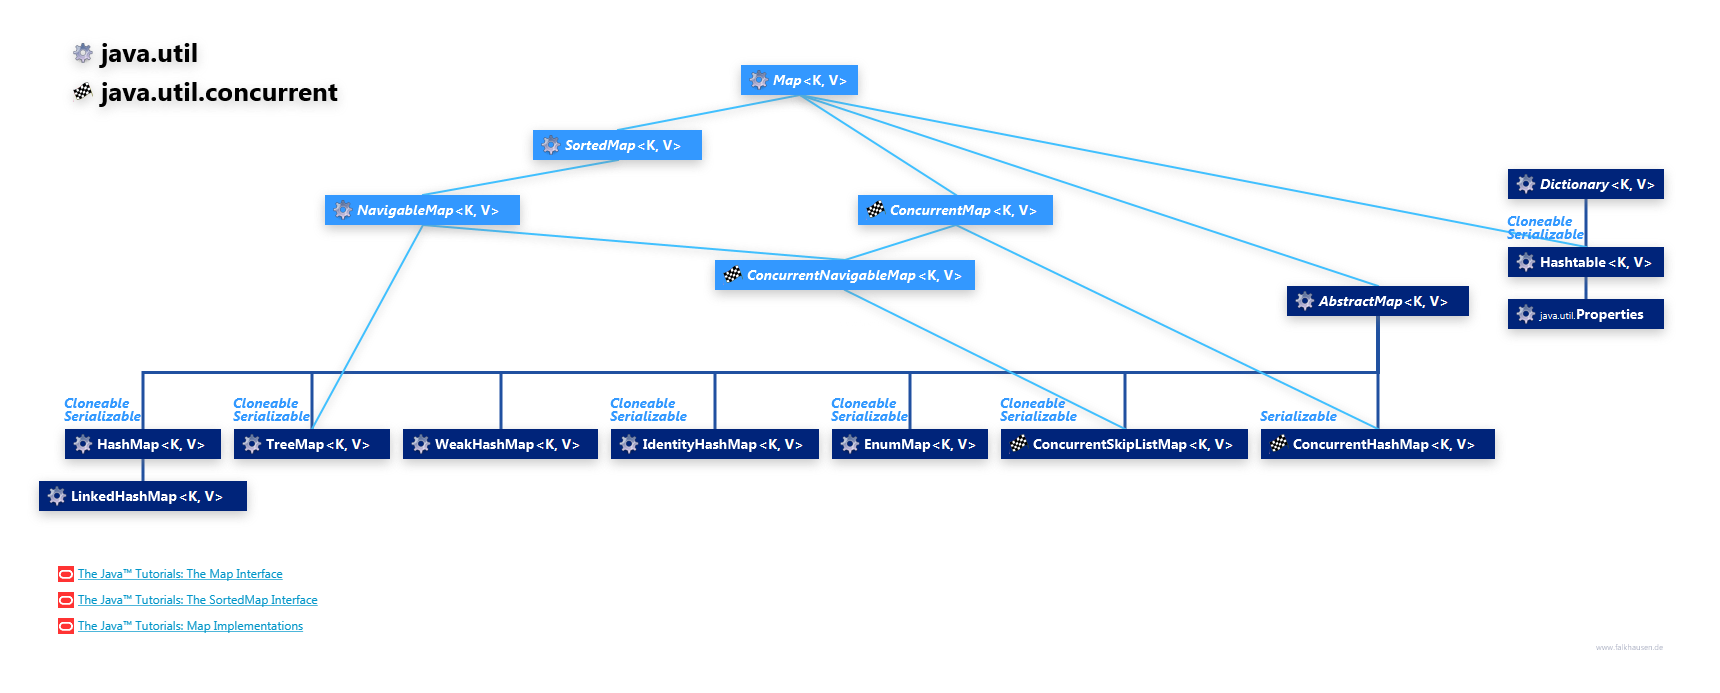 java.util java.util.concurrent Map Hierarchy class diagram and api documentation for Java 8